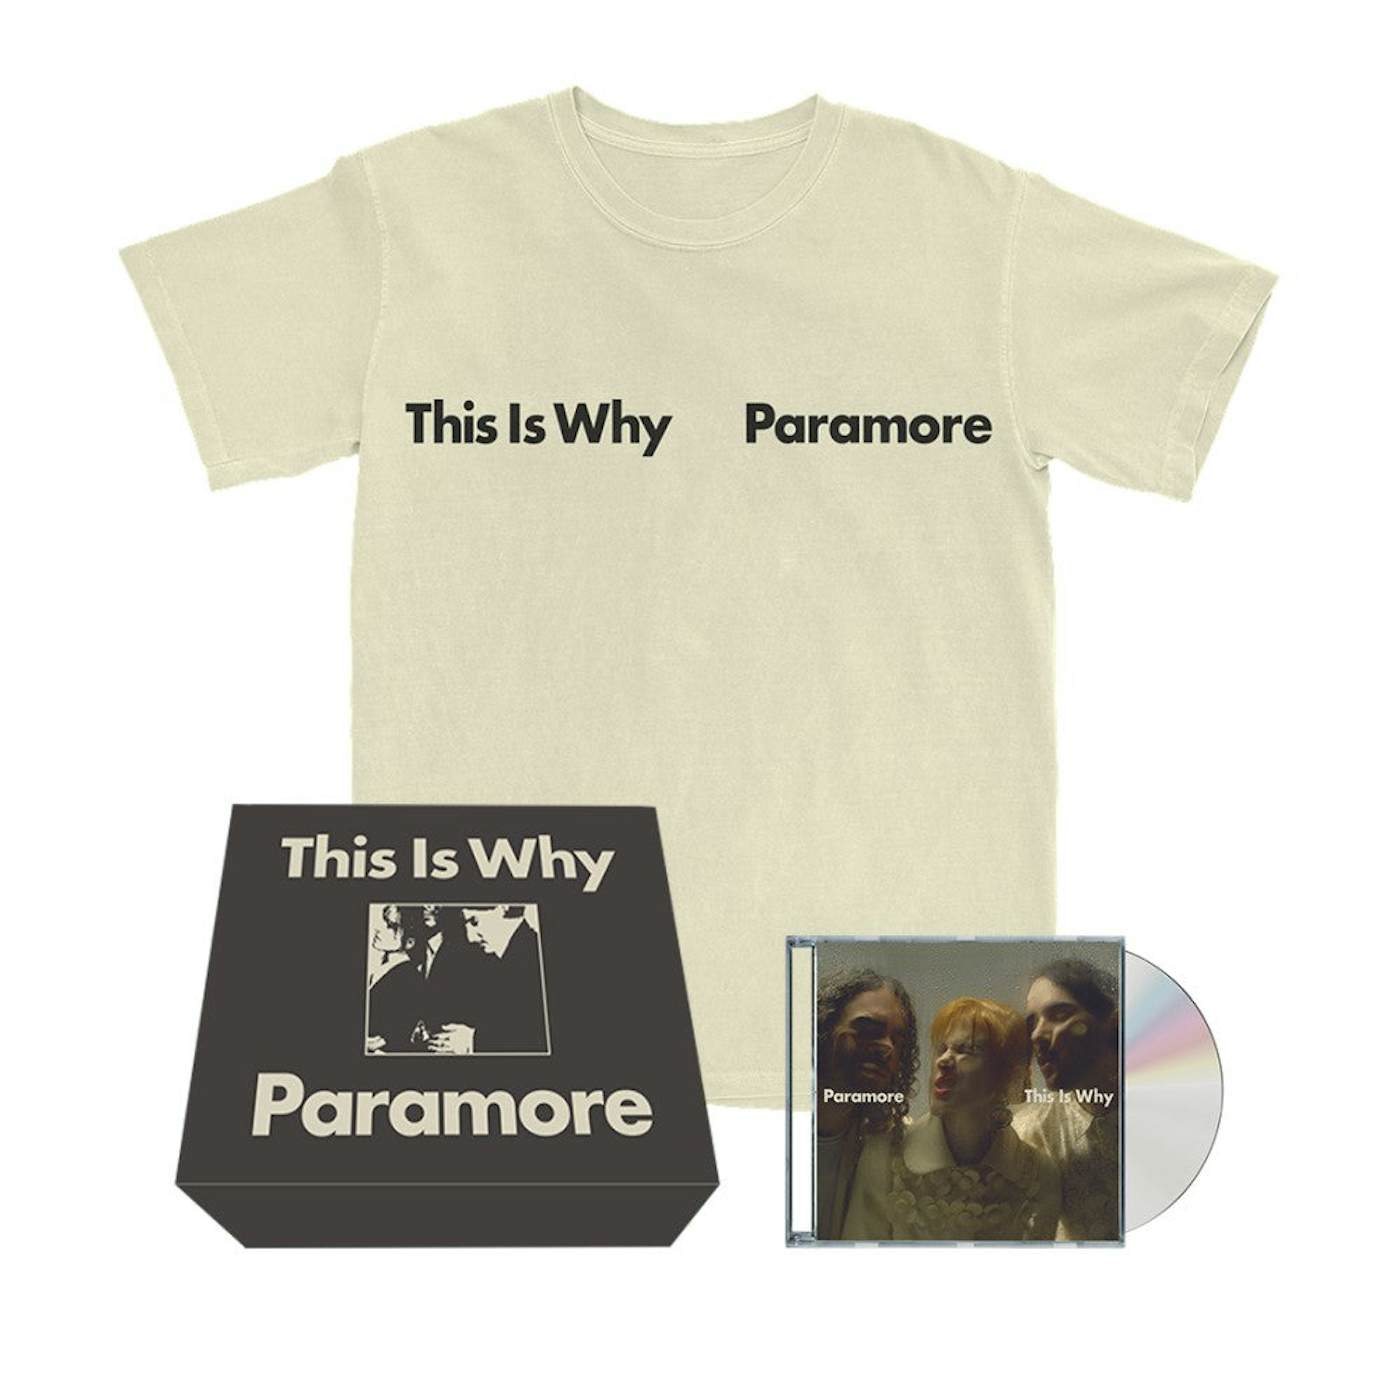 Brand New Eyes Paramore T-Shirt, Paramore shirt sold by